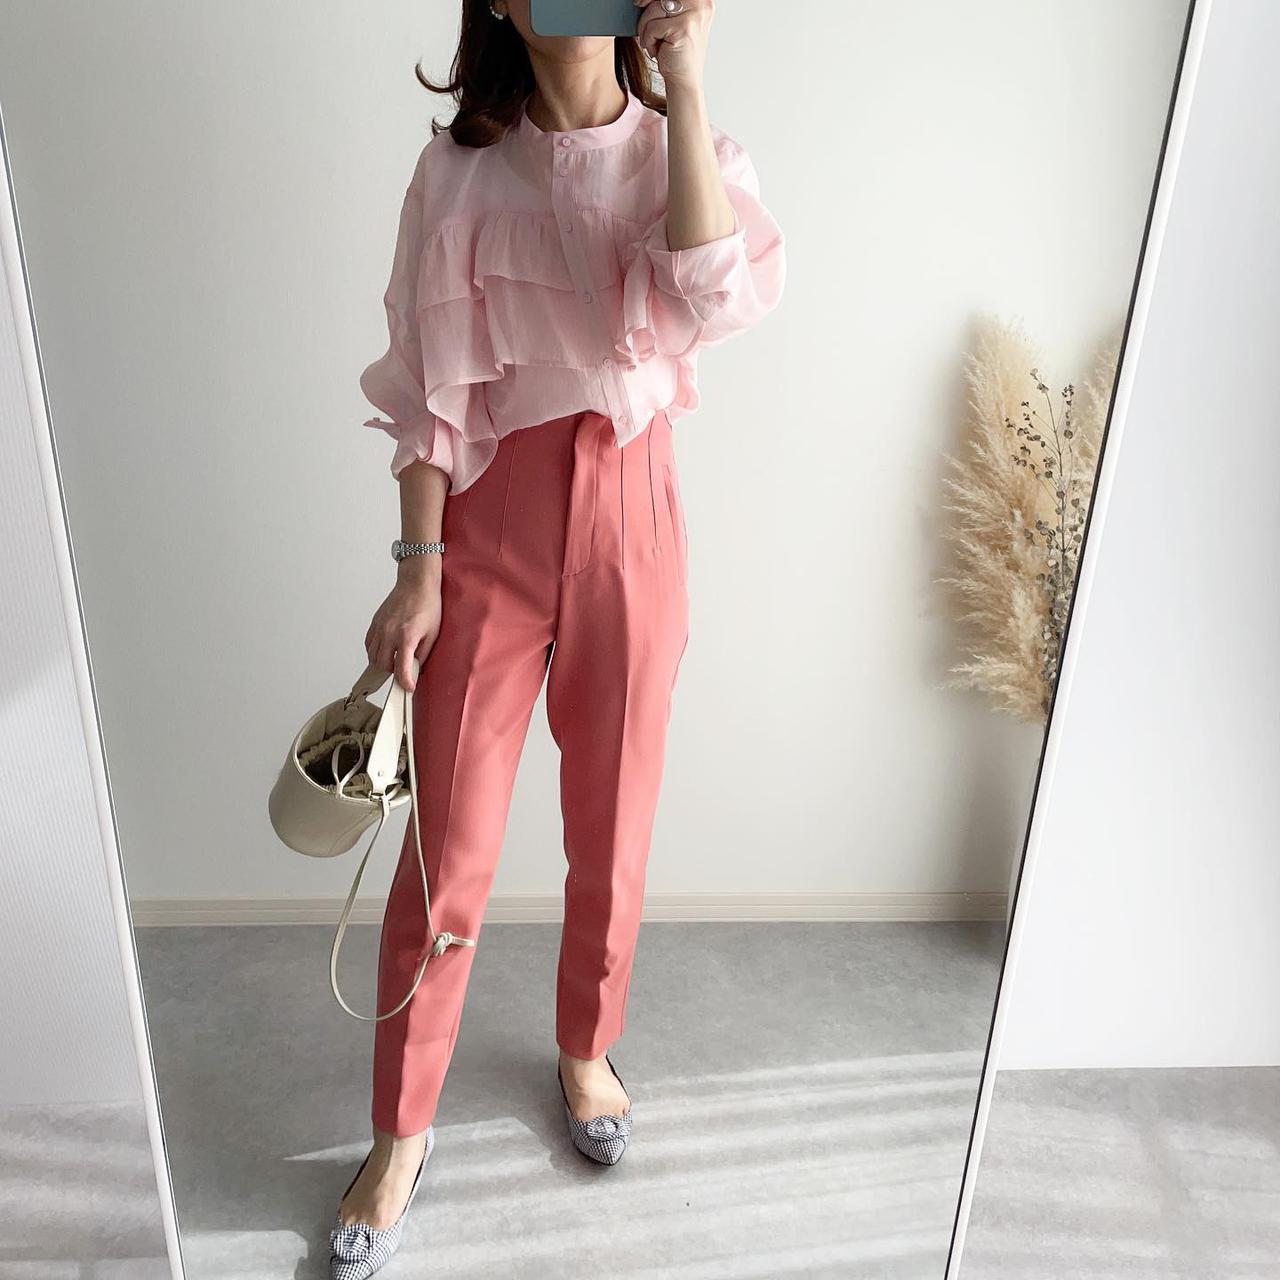 Zara ピンクパンツ コーデ4選 甘すぎず可愛い モデルプレス